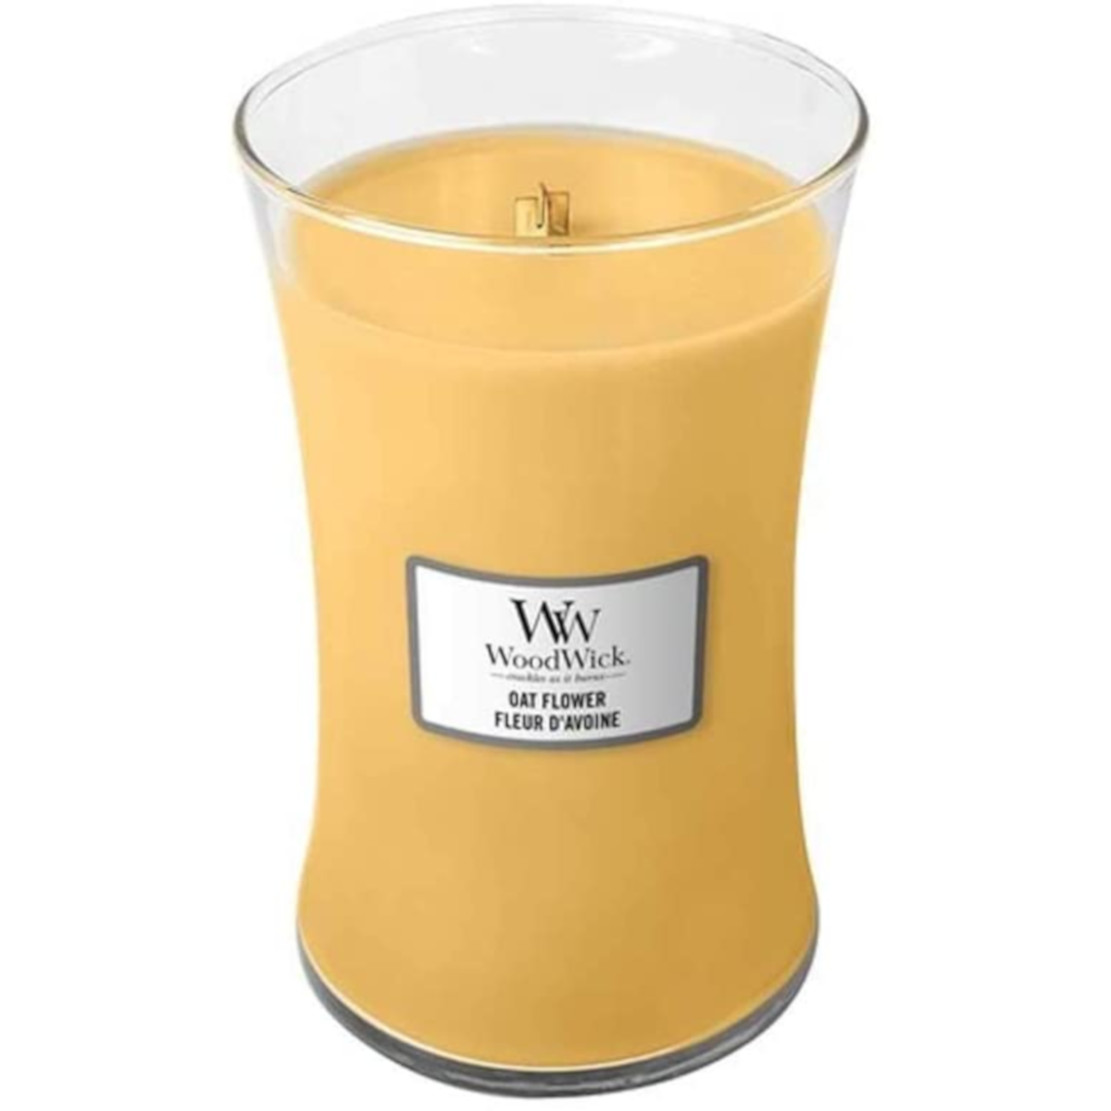 Woodwick Oat flower Large Jar Candle